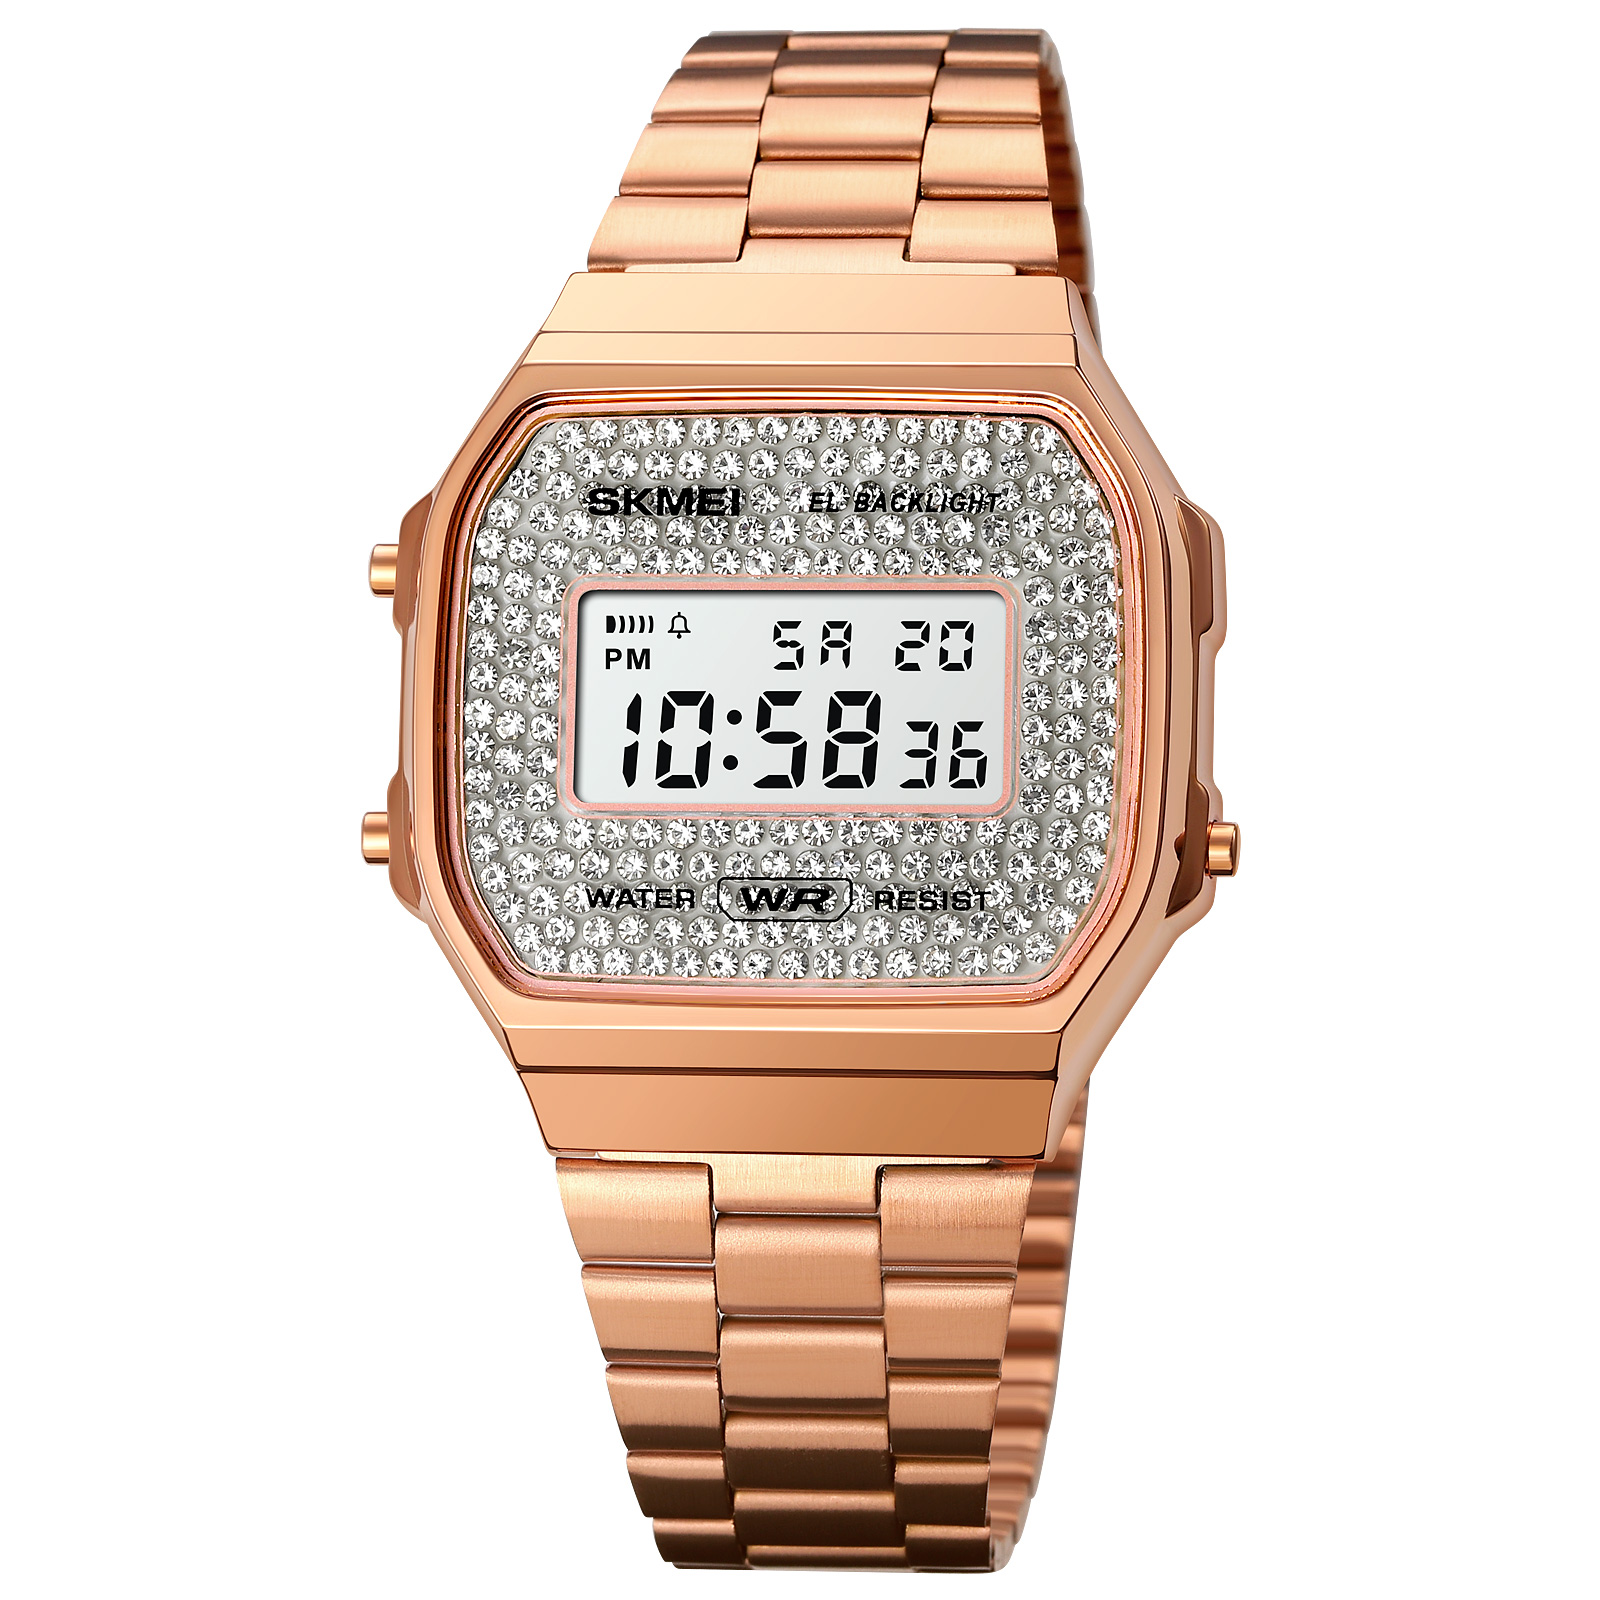 wholesaler for wristwatch-Skmei Watch Manufacture Co.,Ltd